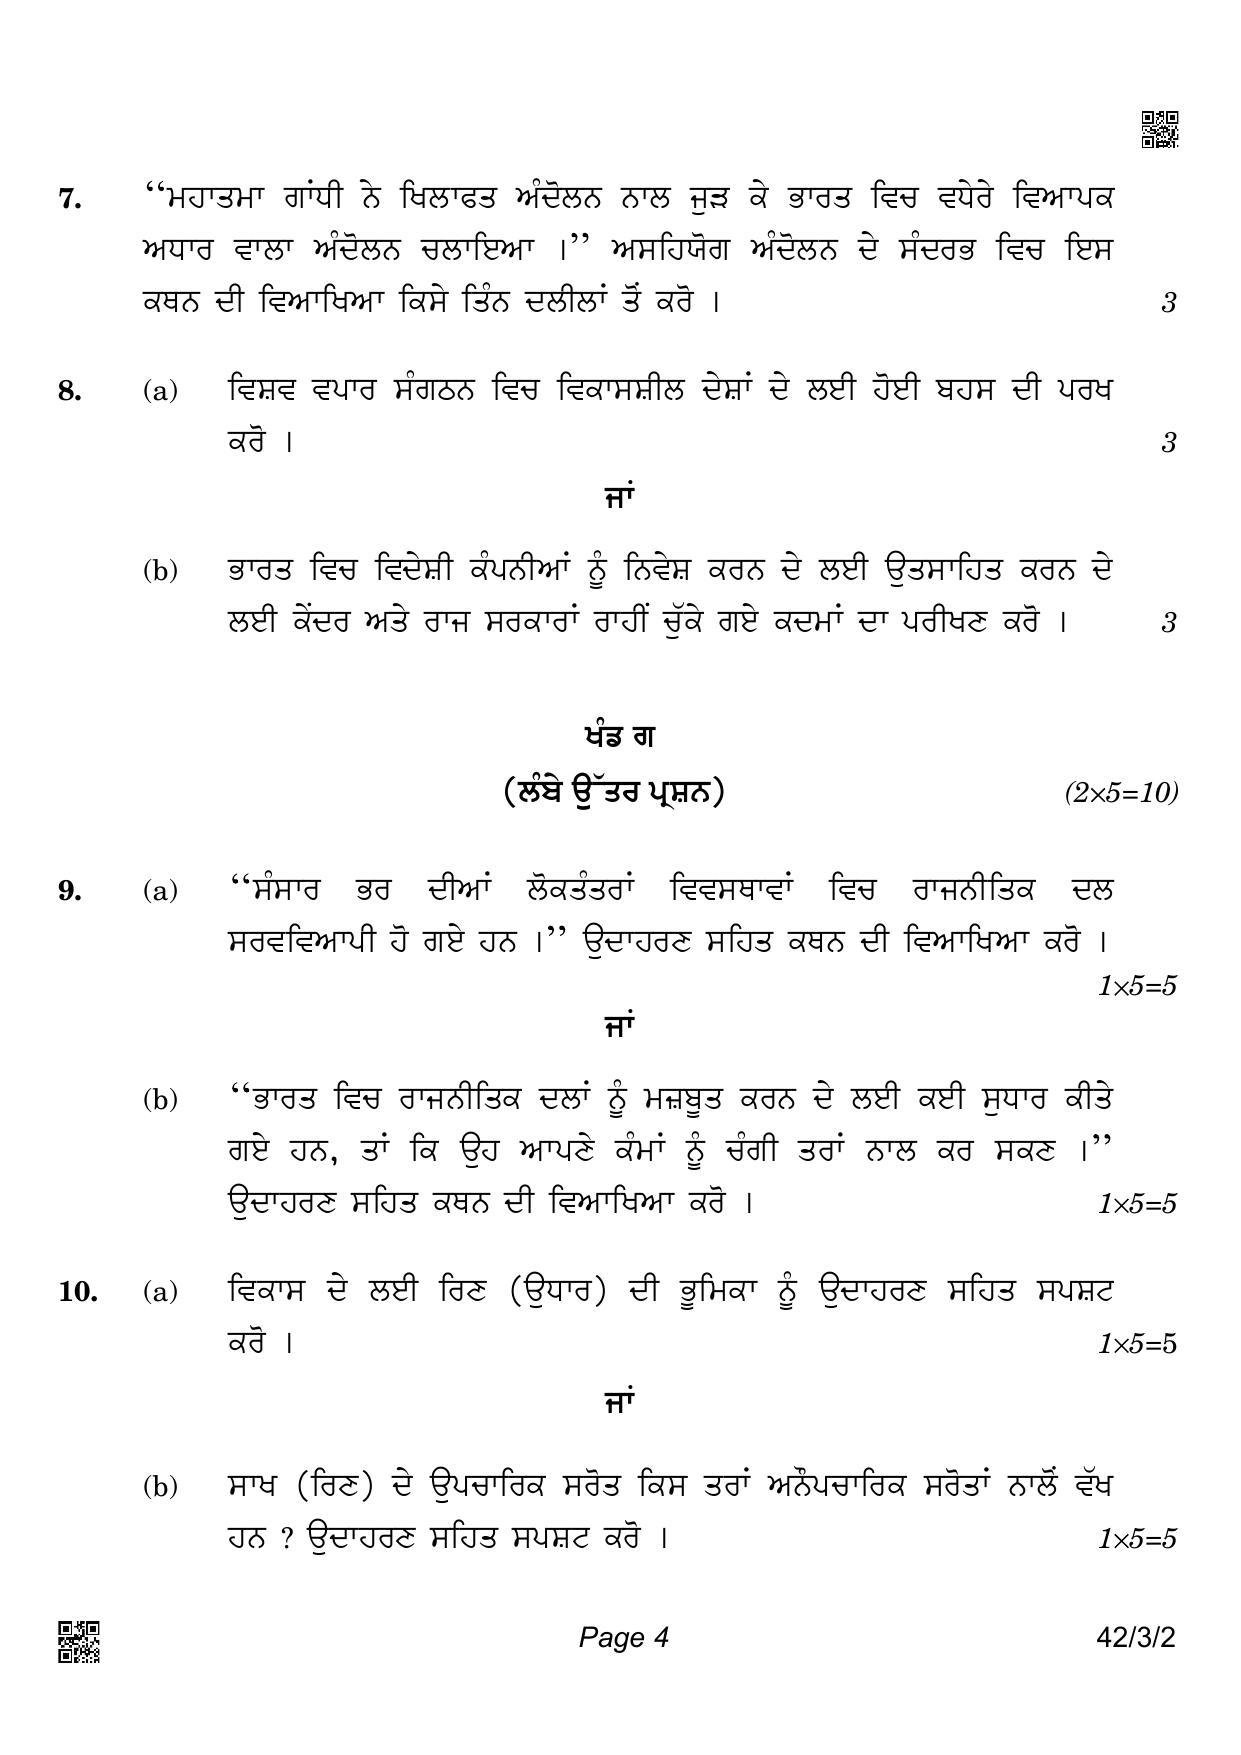 CBSE Class 10 42-3-2 Social Science Punjabi Version 2022 Question Paper - Page 4